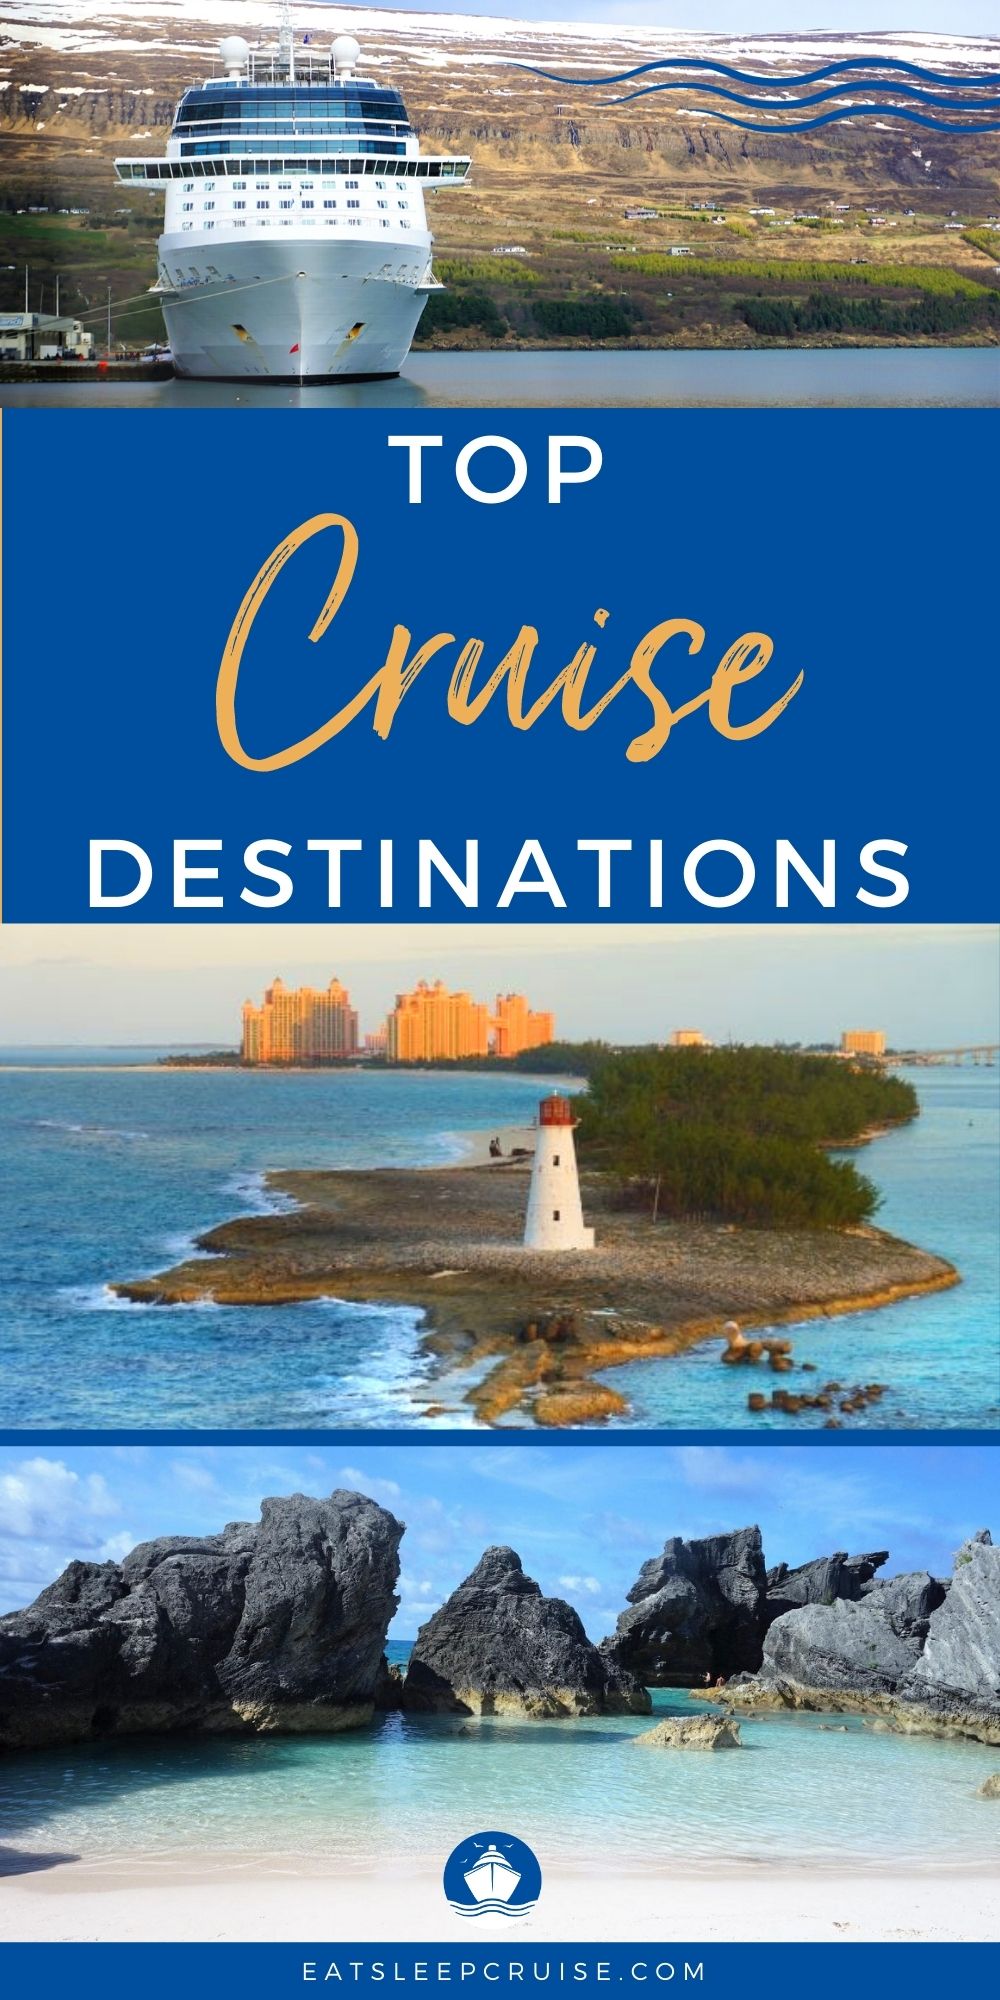 Top Cruise Destinations